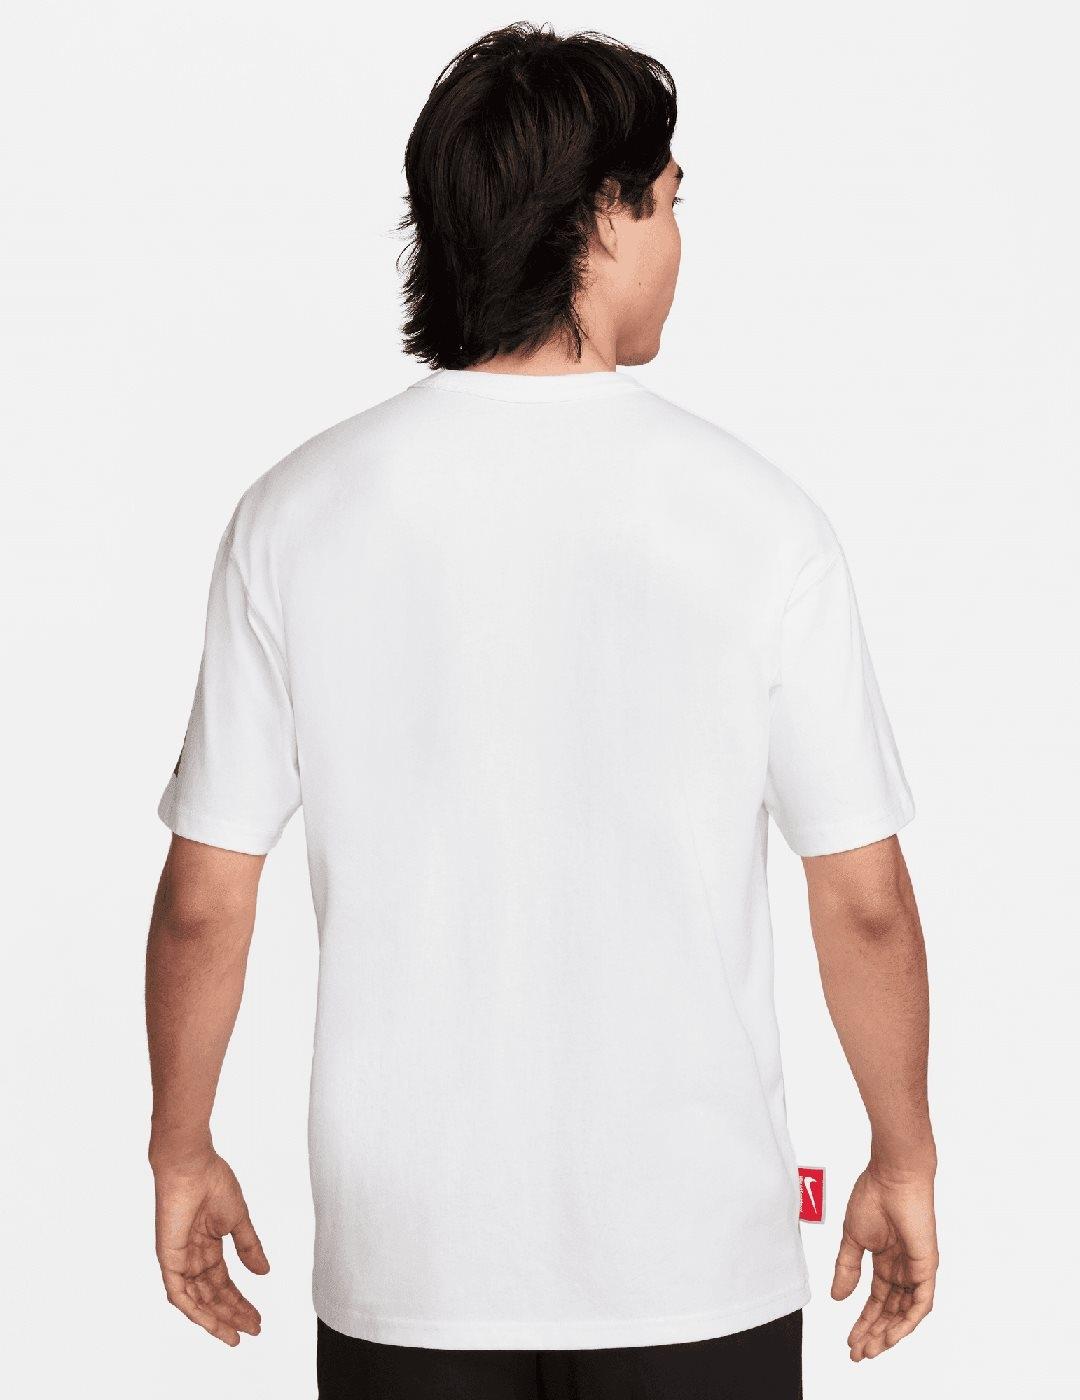 Camiseta Nike Sportswear Blanco